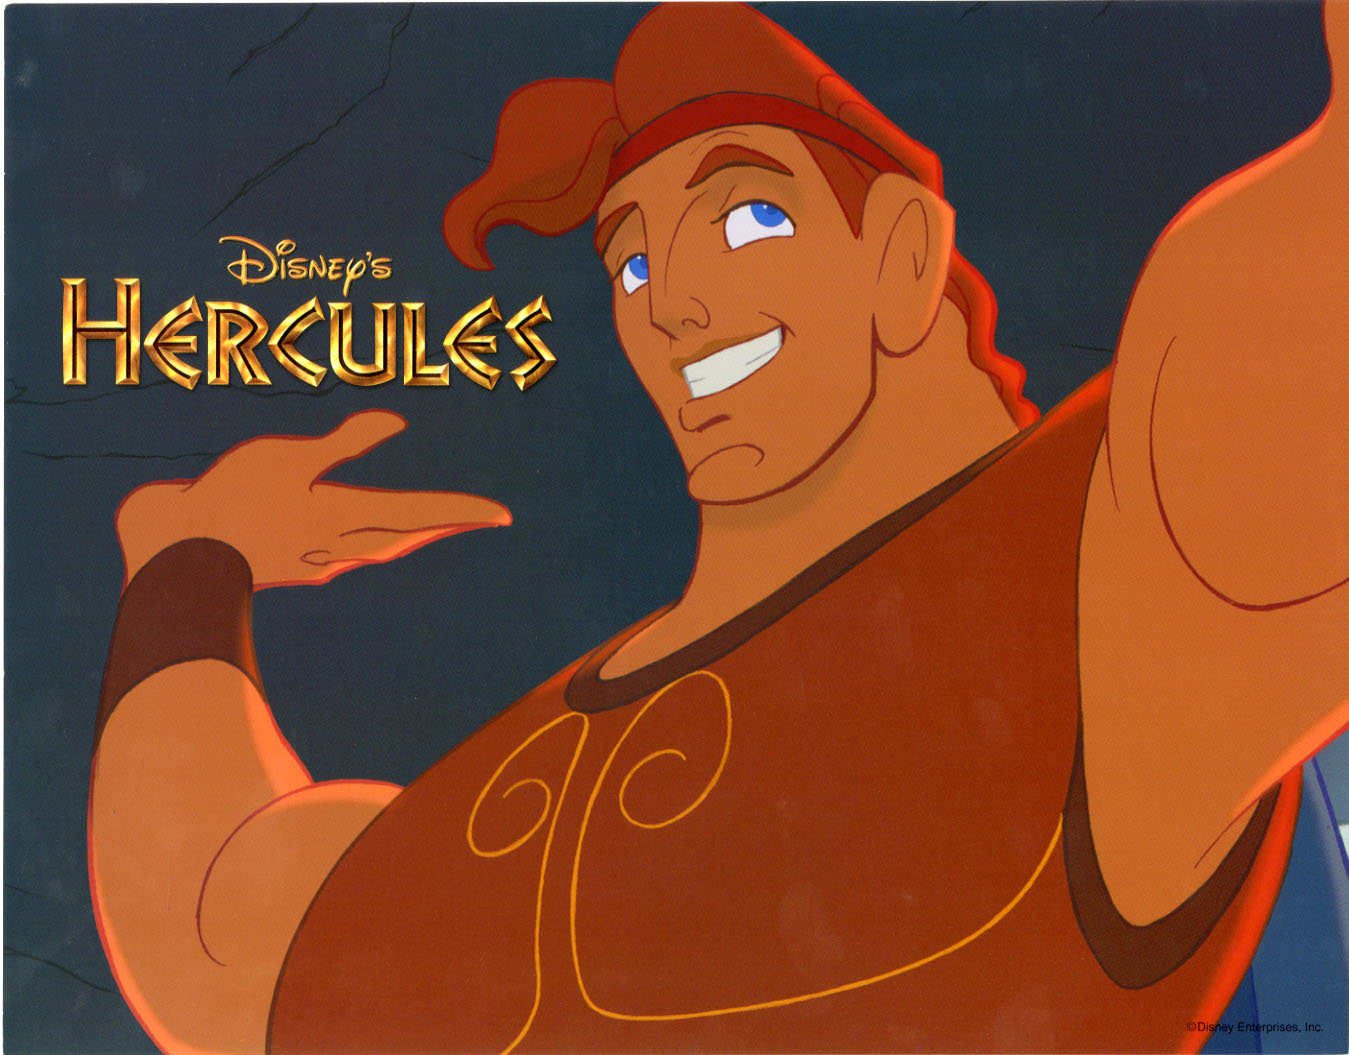 Disney Hercules Movie HD Wallpaper Image For Pc Cartoons